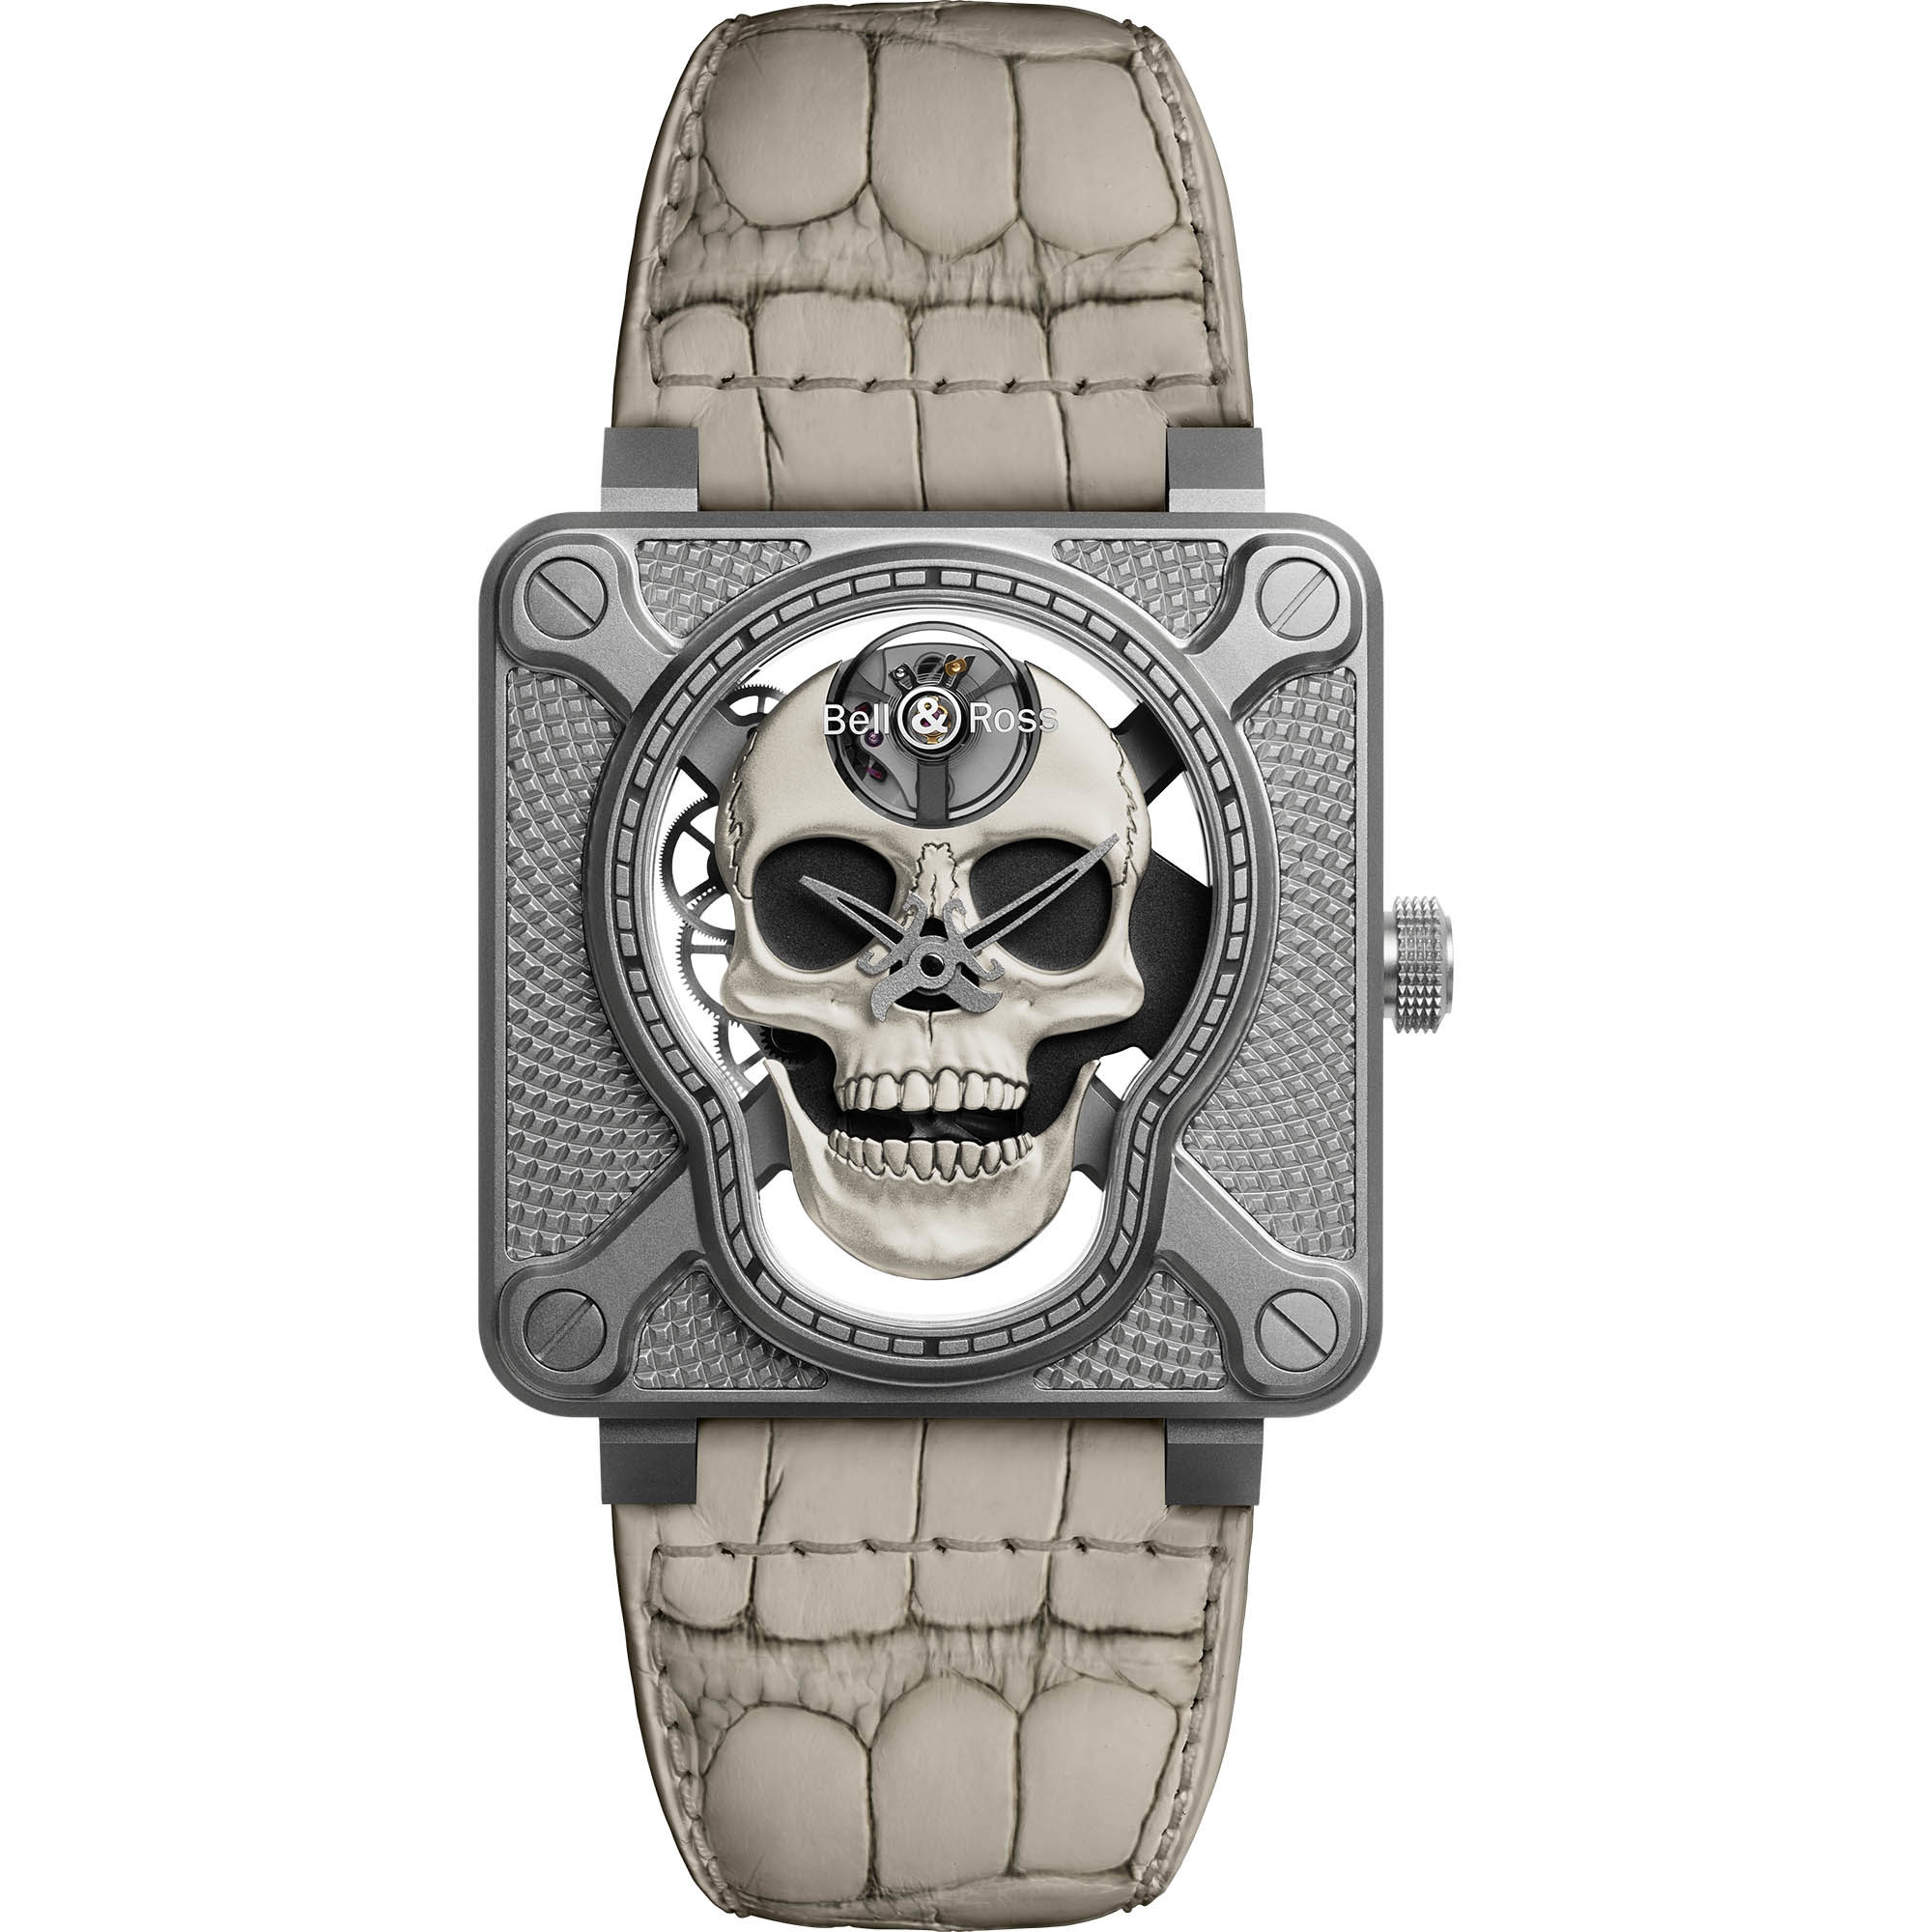 new replica Bell & Ross BR 01 Laughing Skull White BR01-SKULL-0-SK-ST watches